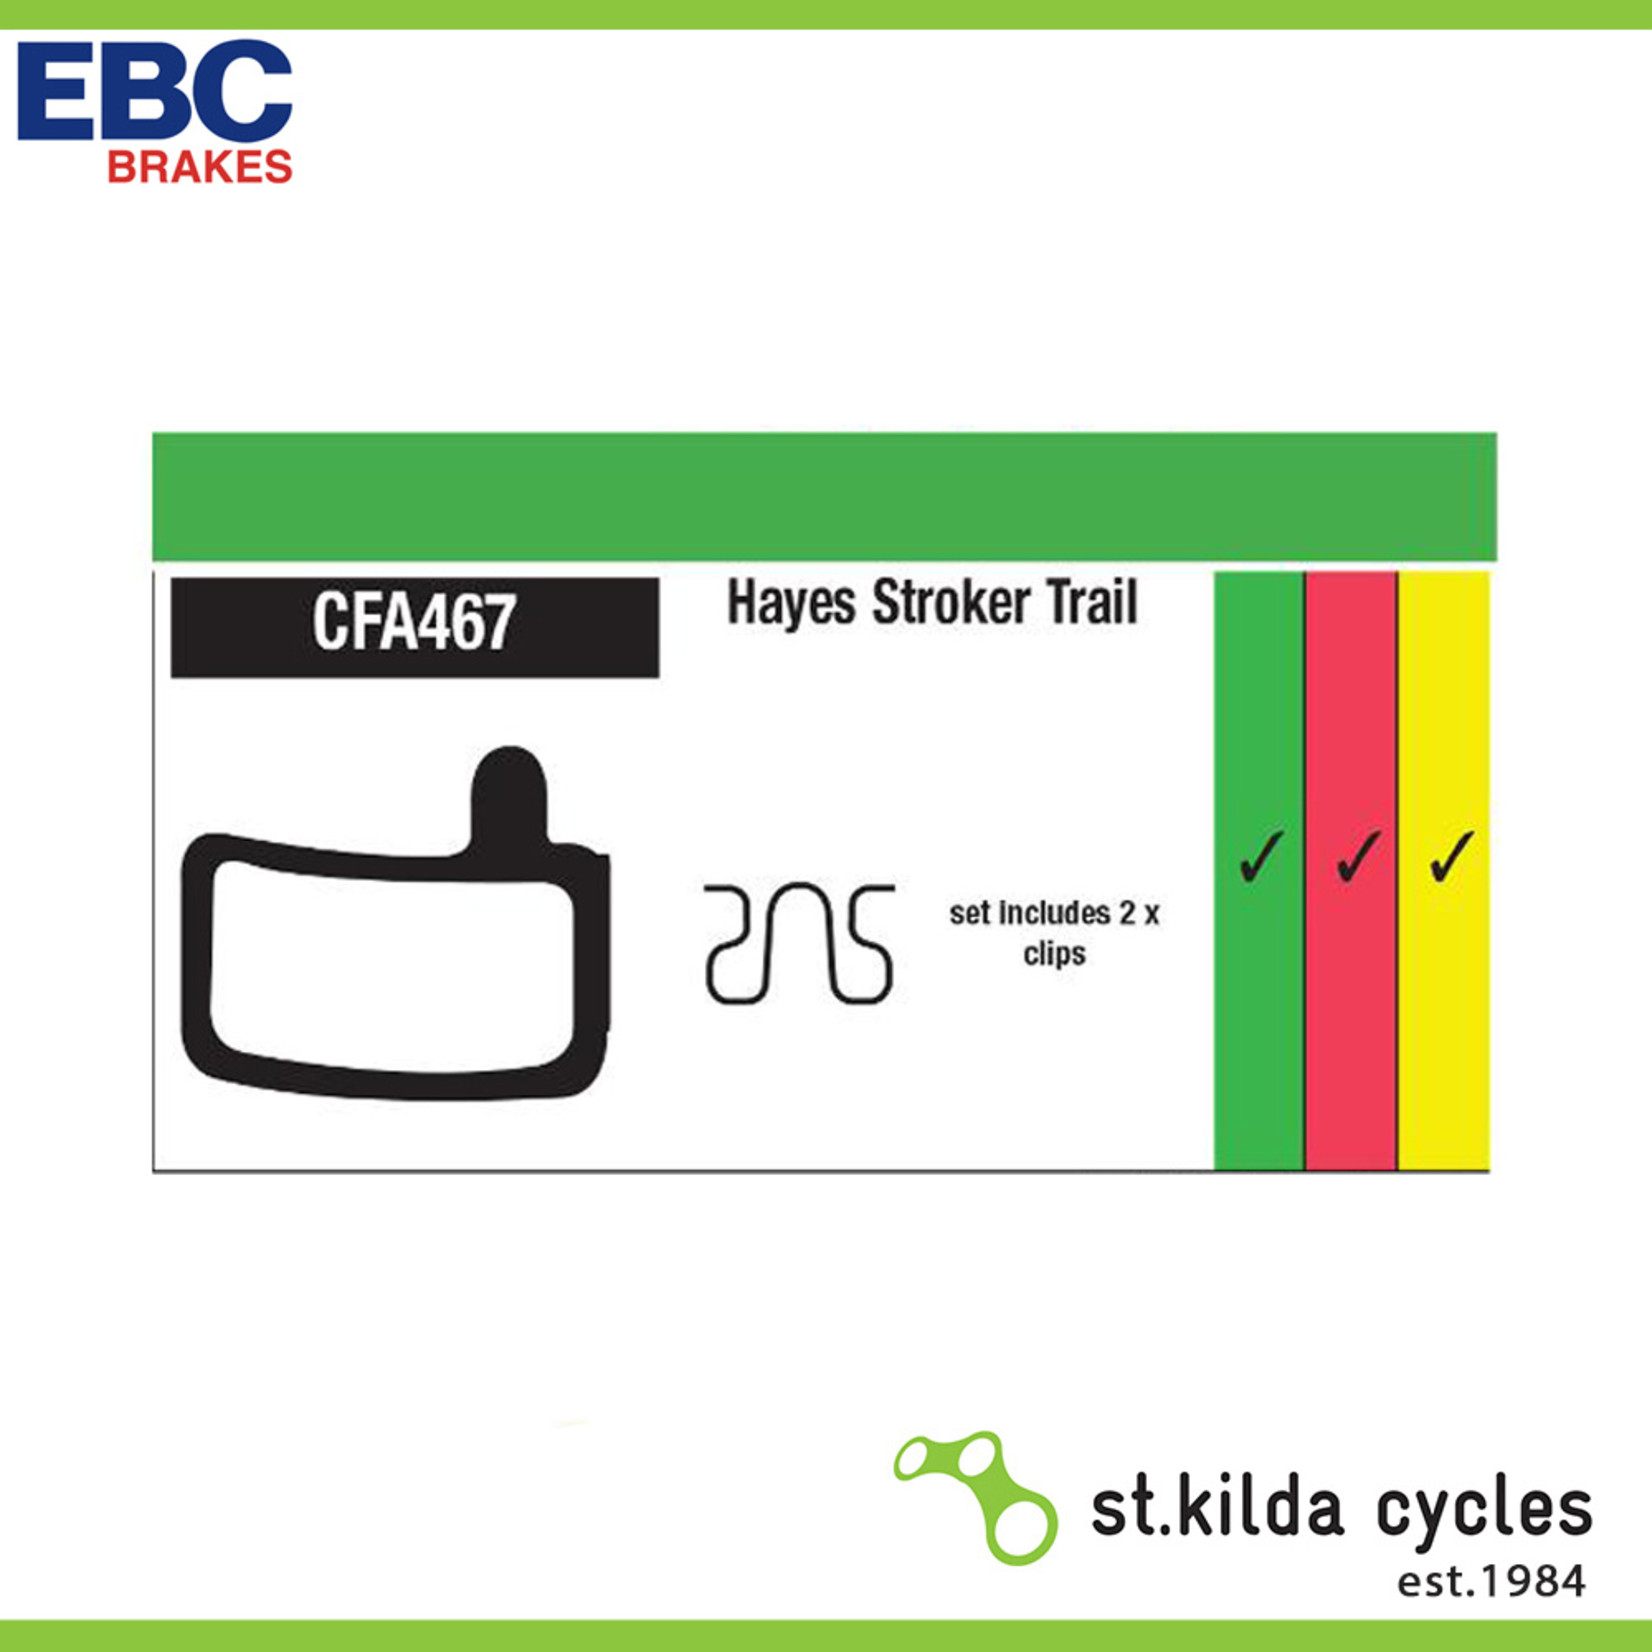 EBC EBC Brake Pad - 467G Hayes Stroker Trail Green Compound EB467G